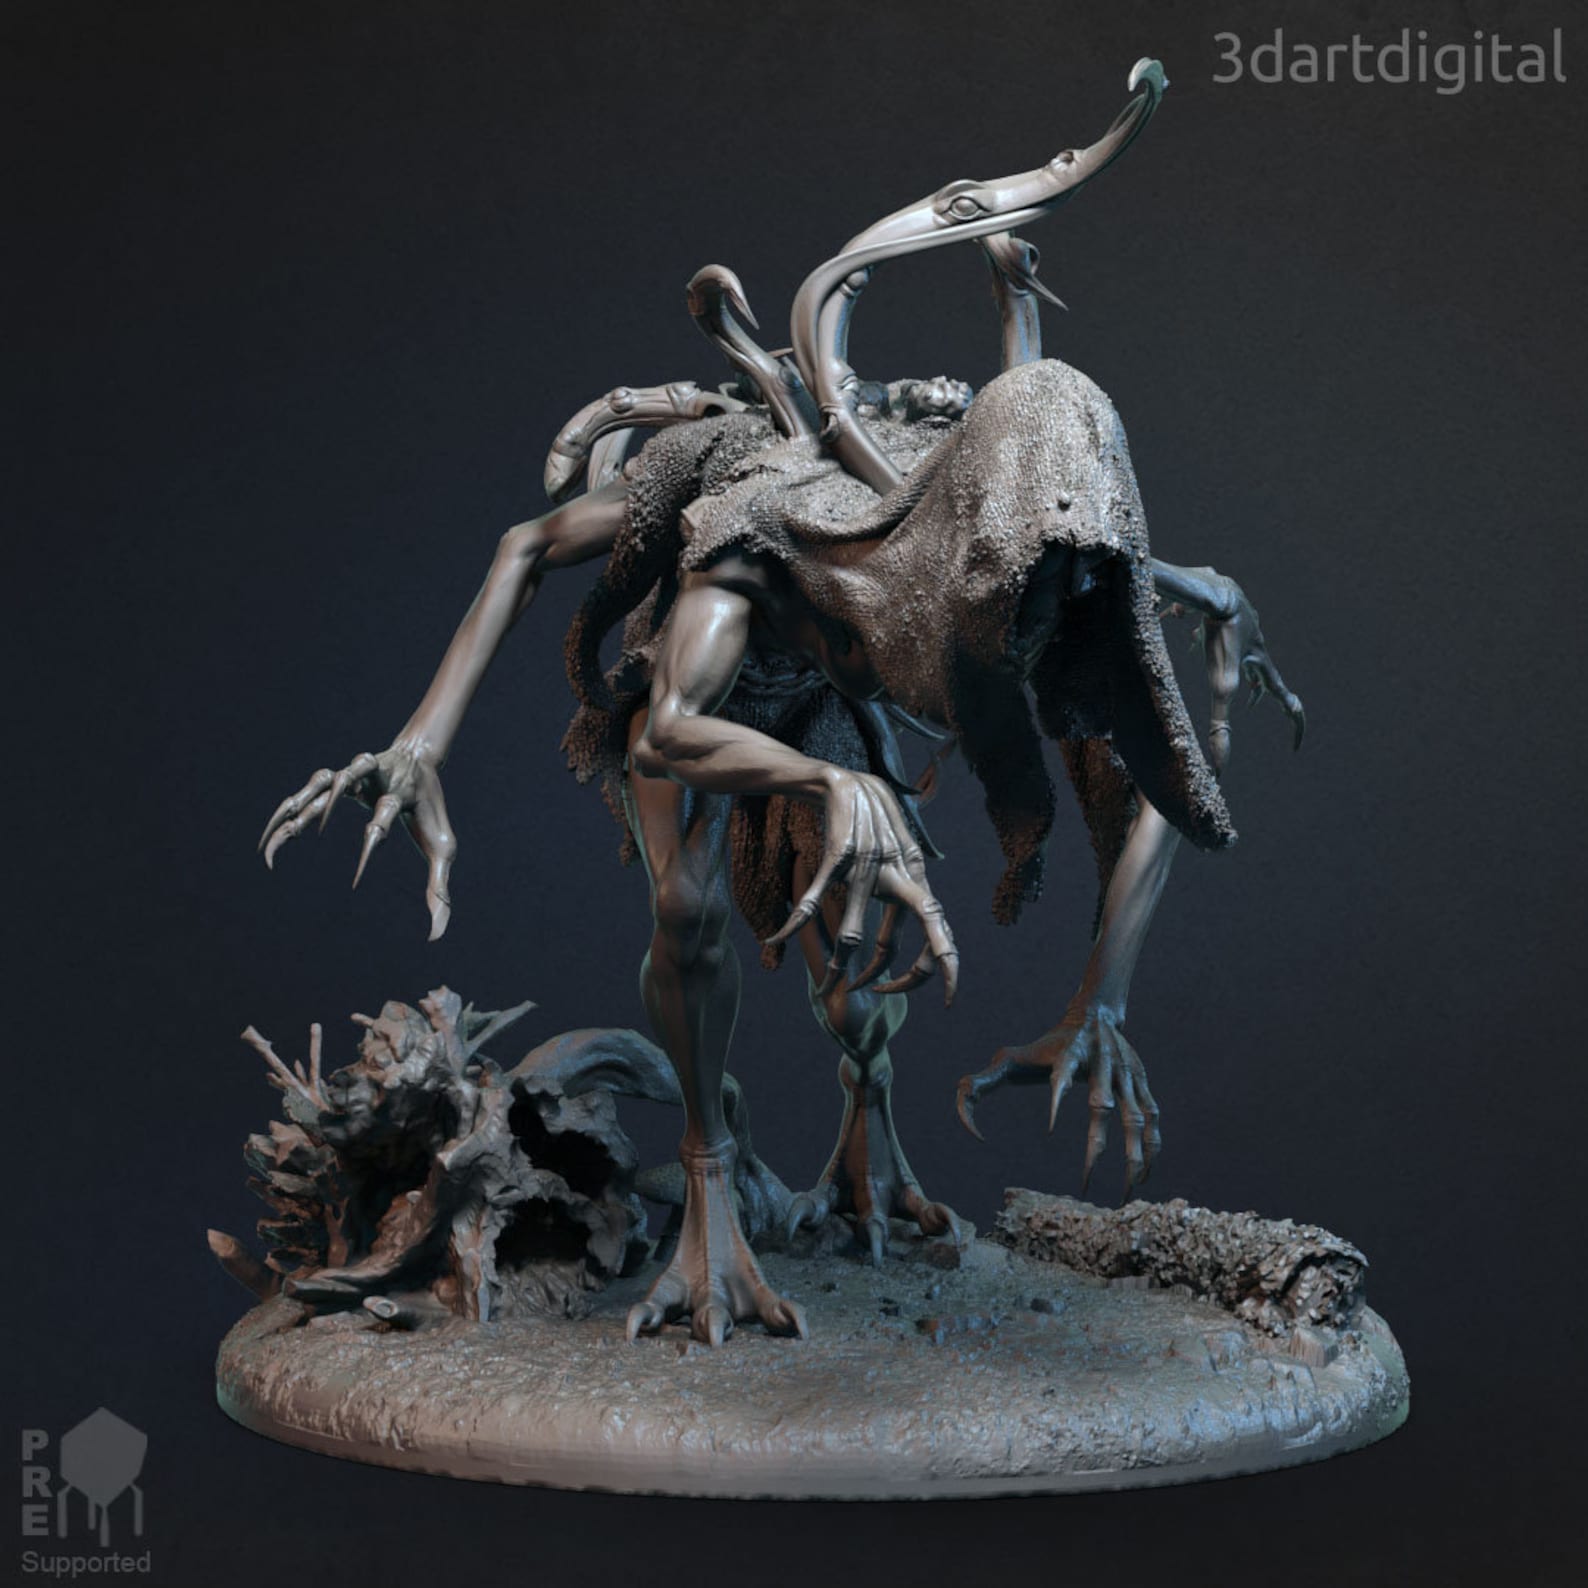 Shadow Monster Unpainted Miniature - Etsy